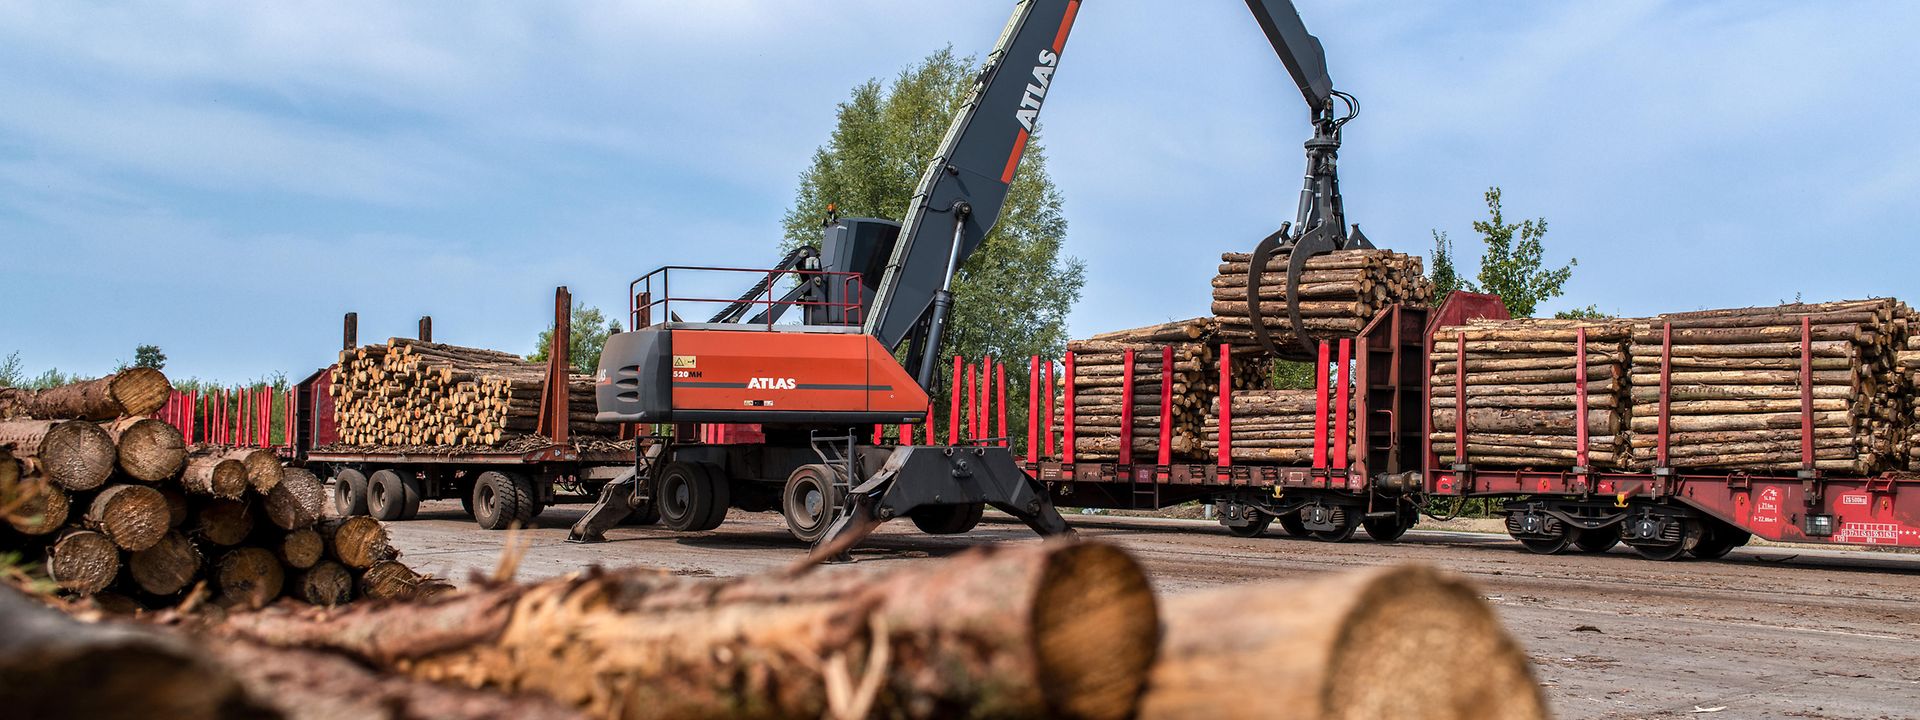 A crane loads raw timber onto a stanchion wagon